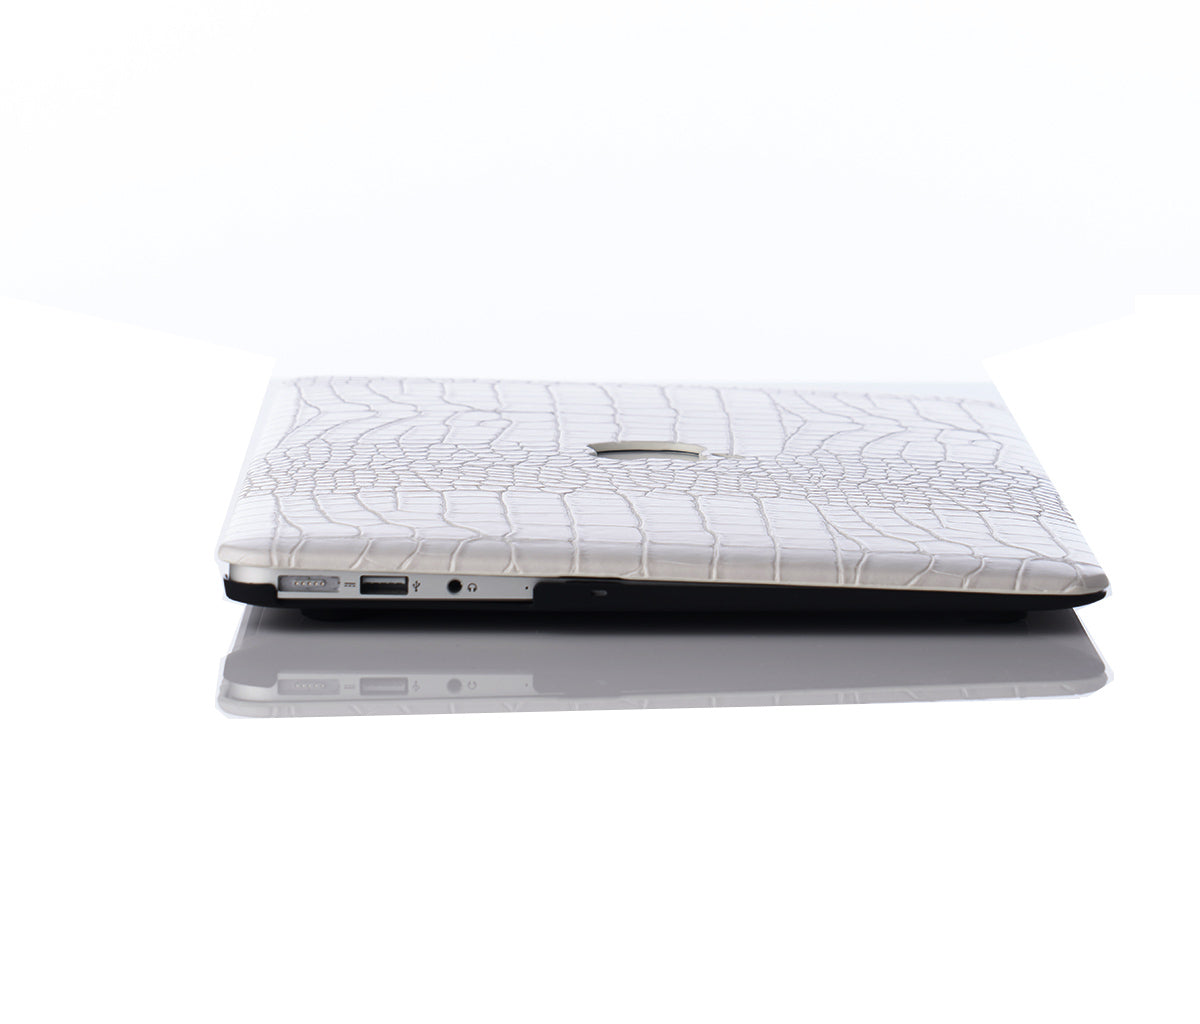 Snow Faux Crocodile MacBook Case